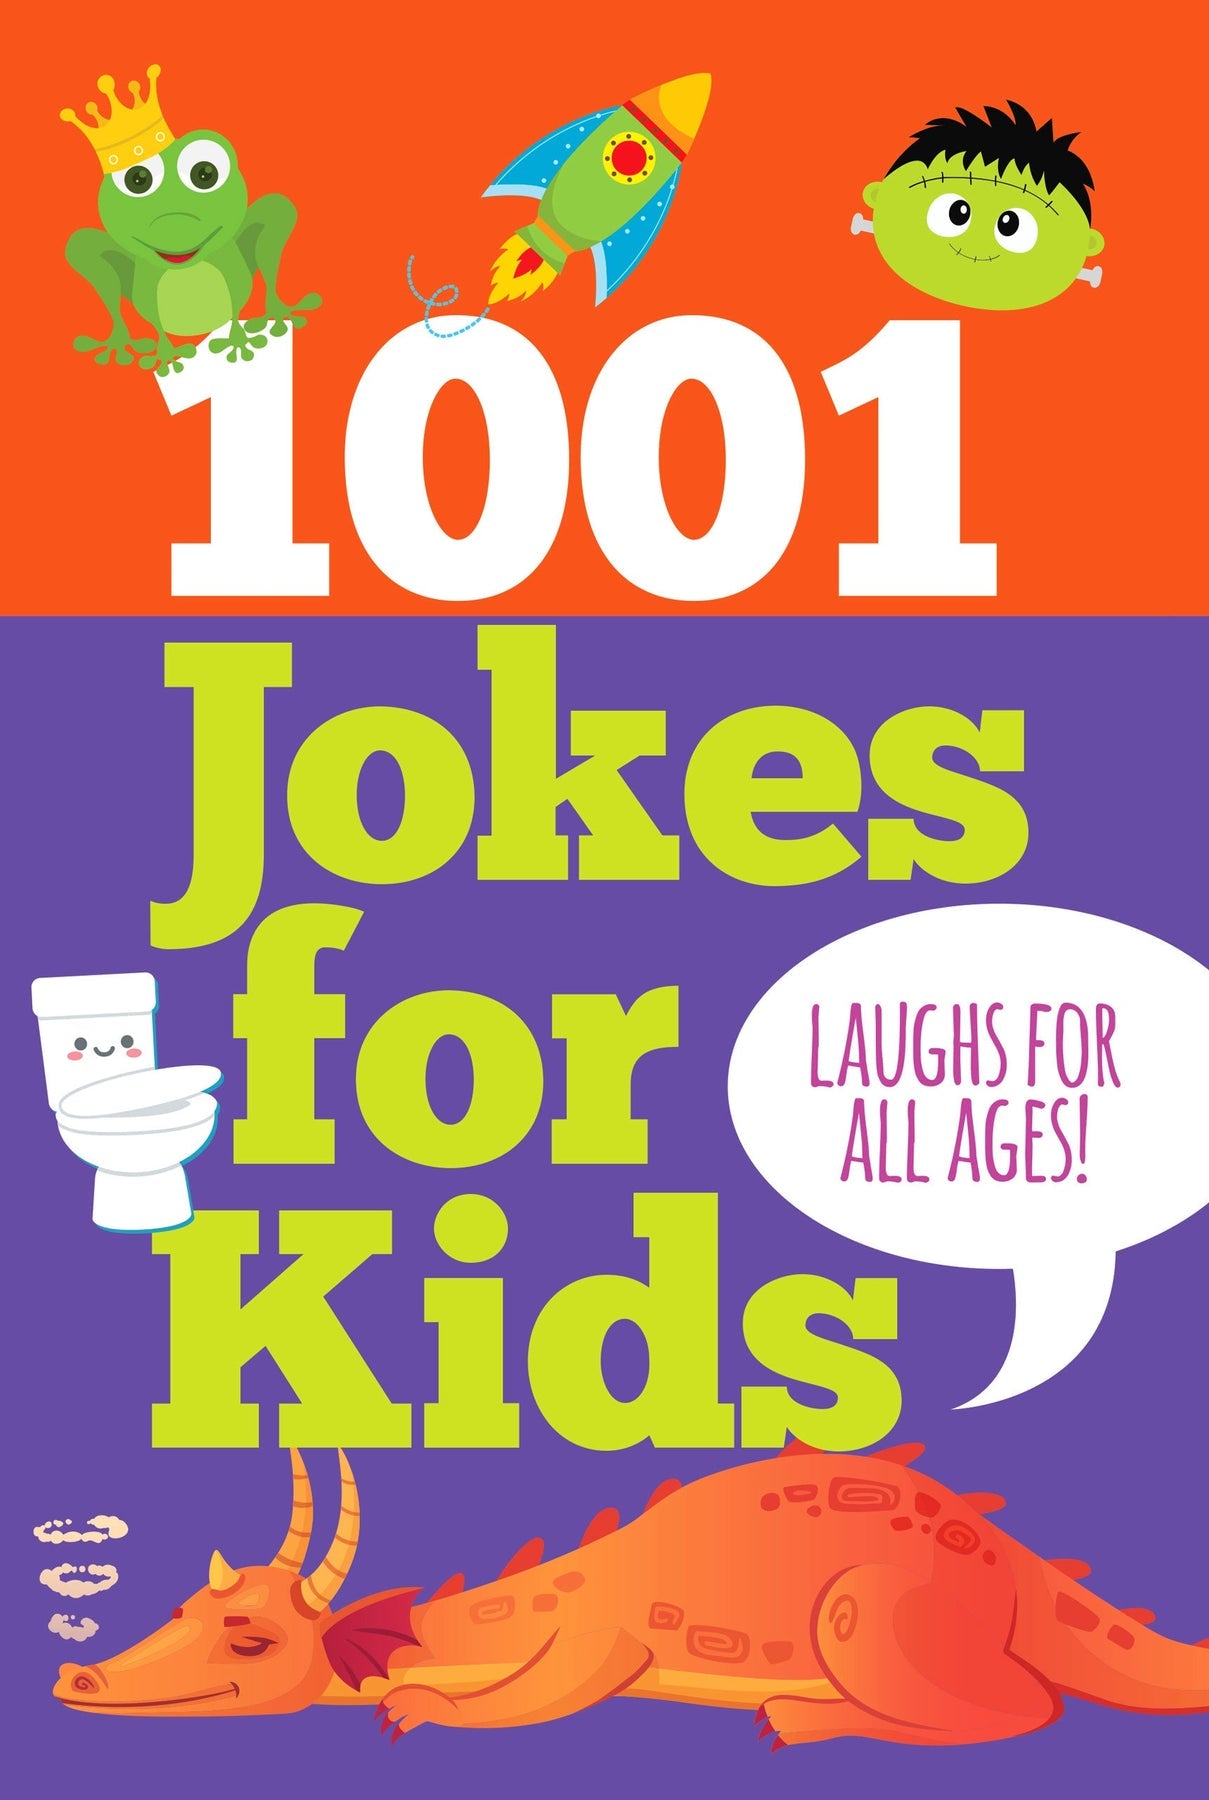 1001 Jokes for Kids by Peter Pauper Press #339430